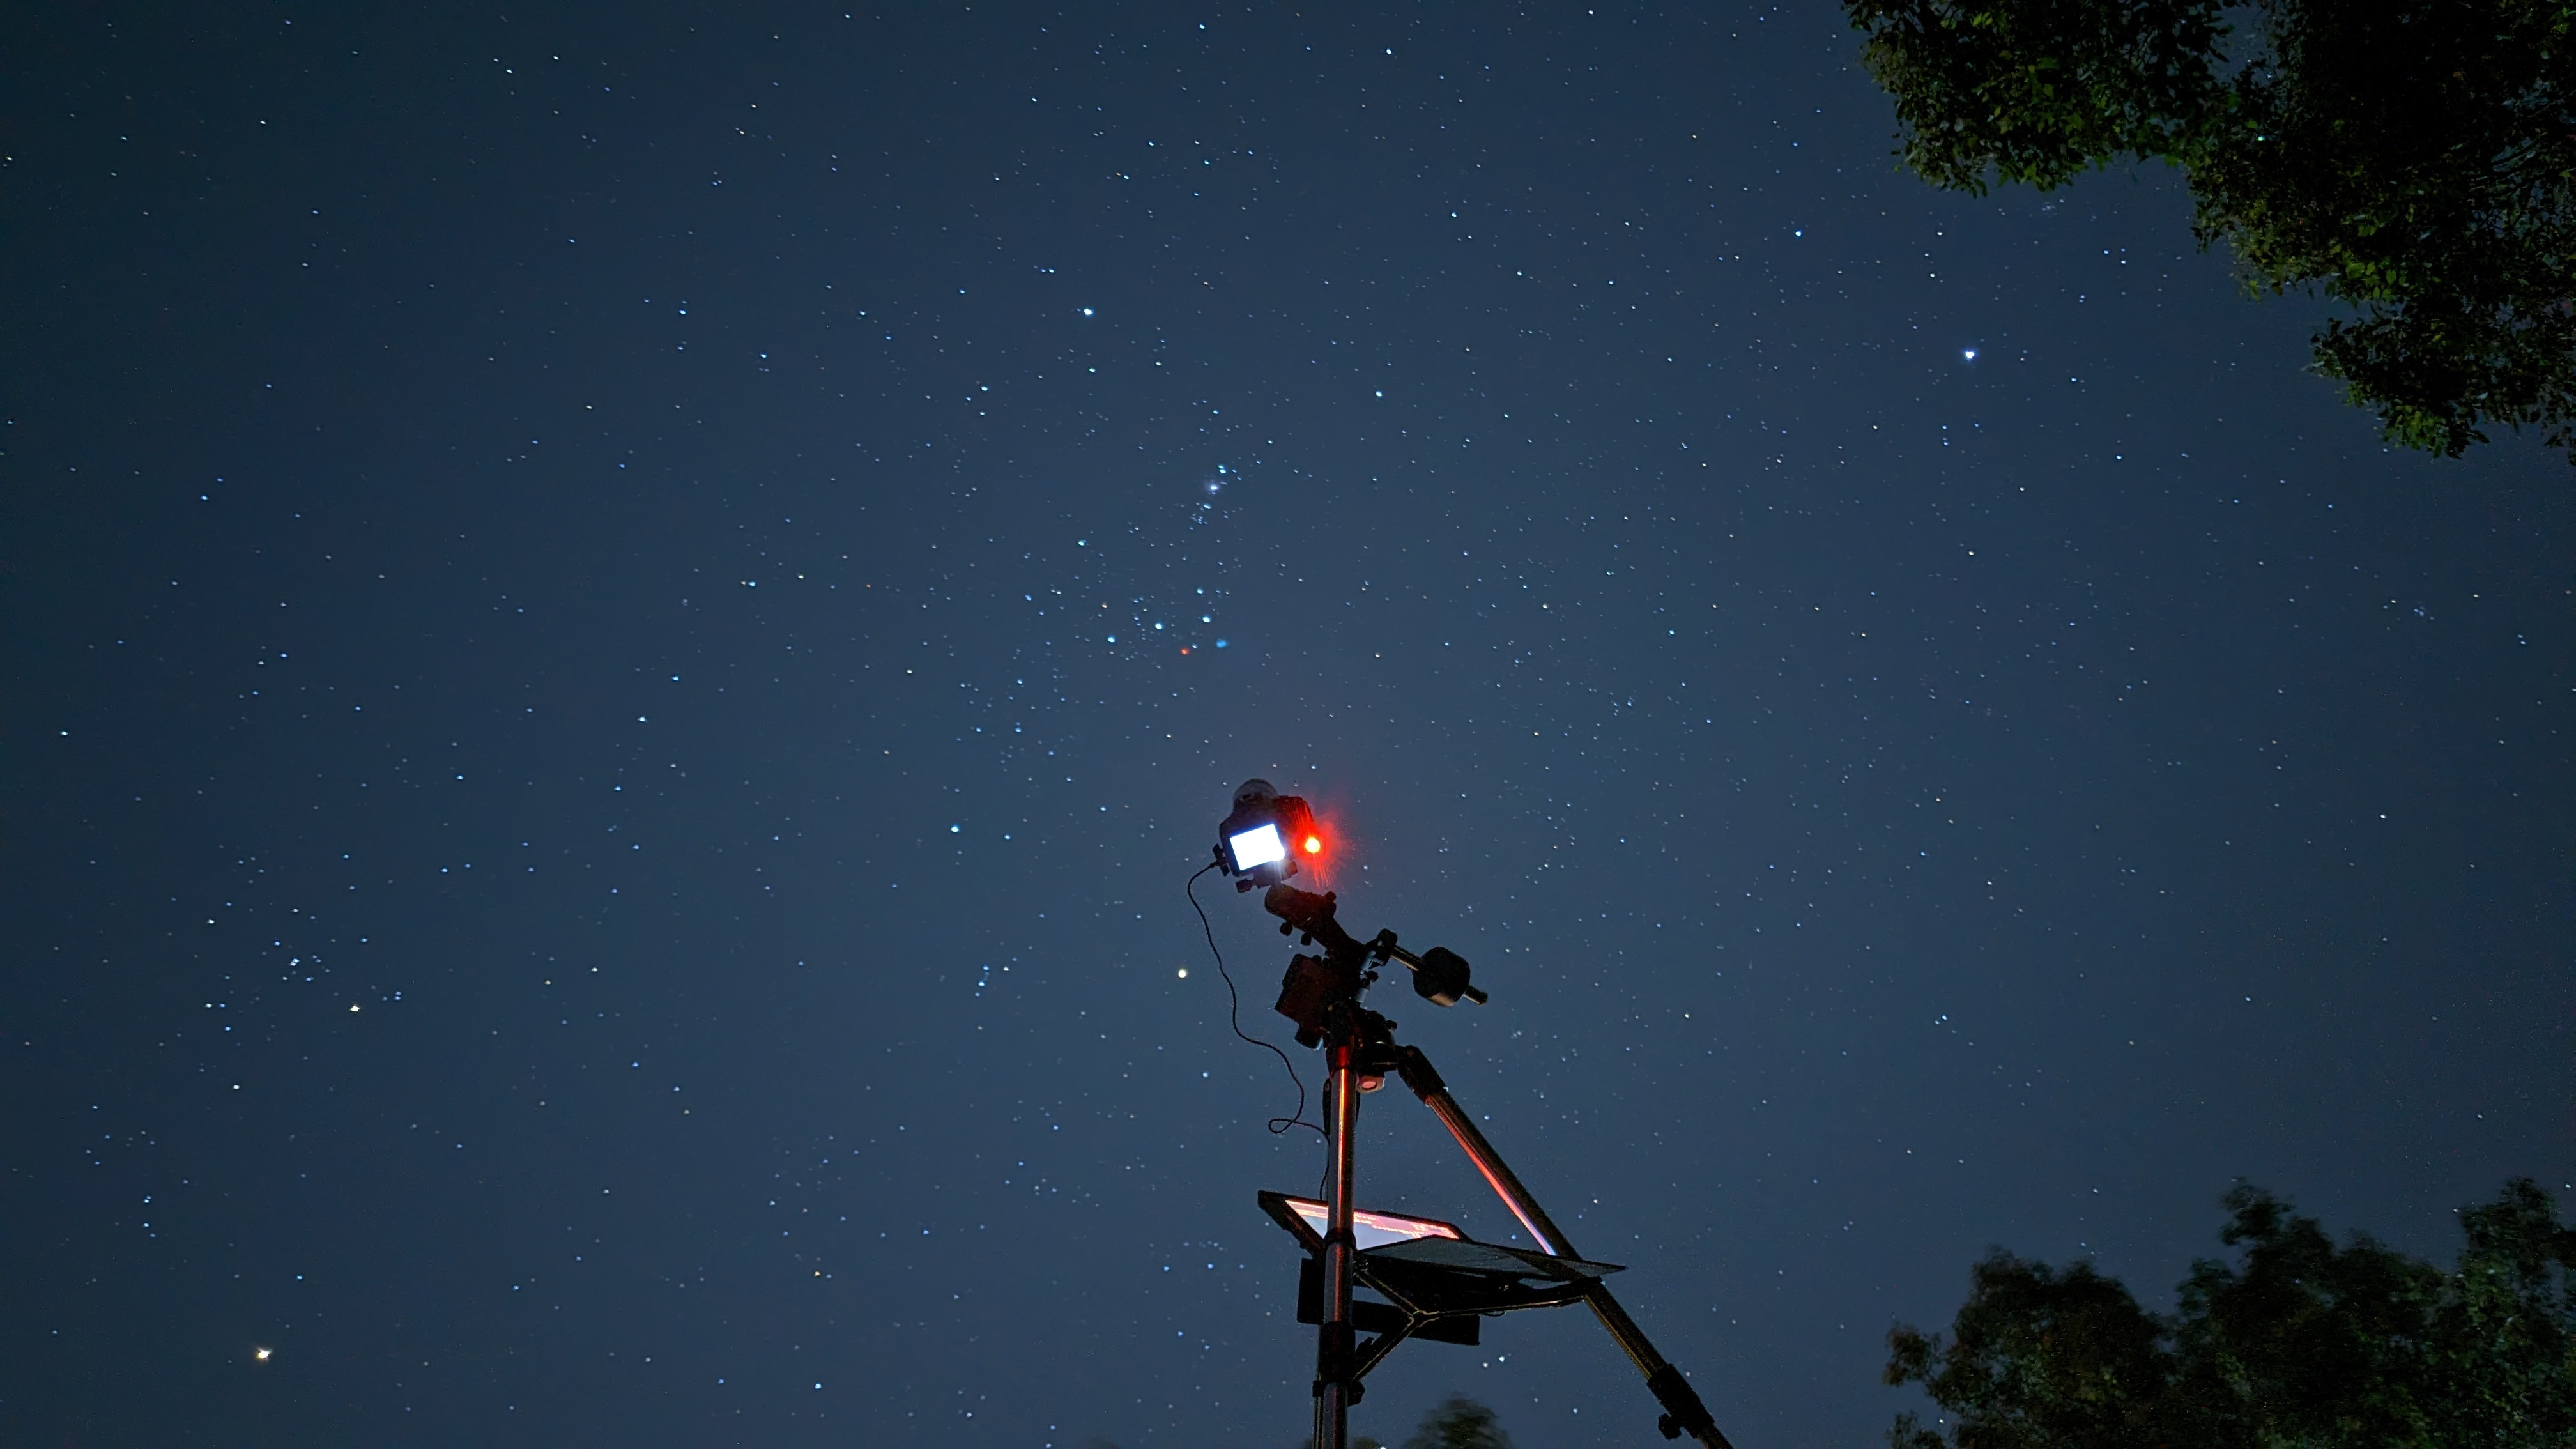 Darcy Wenn's portable astrophotography setup imaging the Orion Nebula.